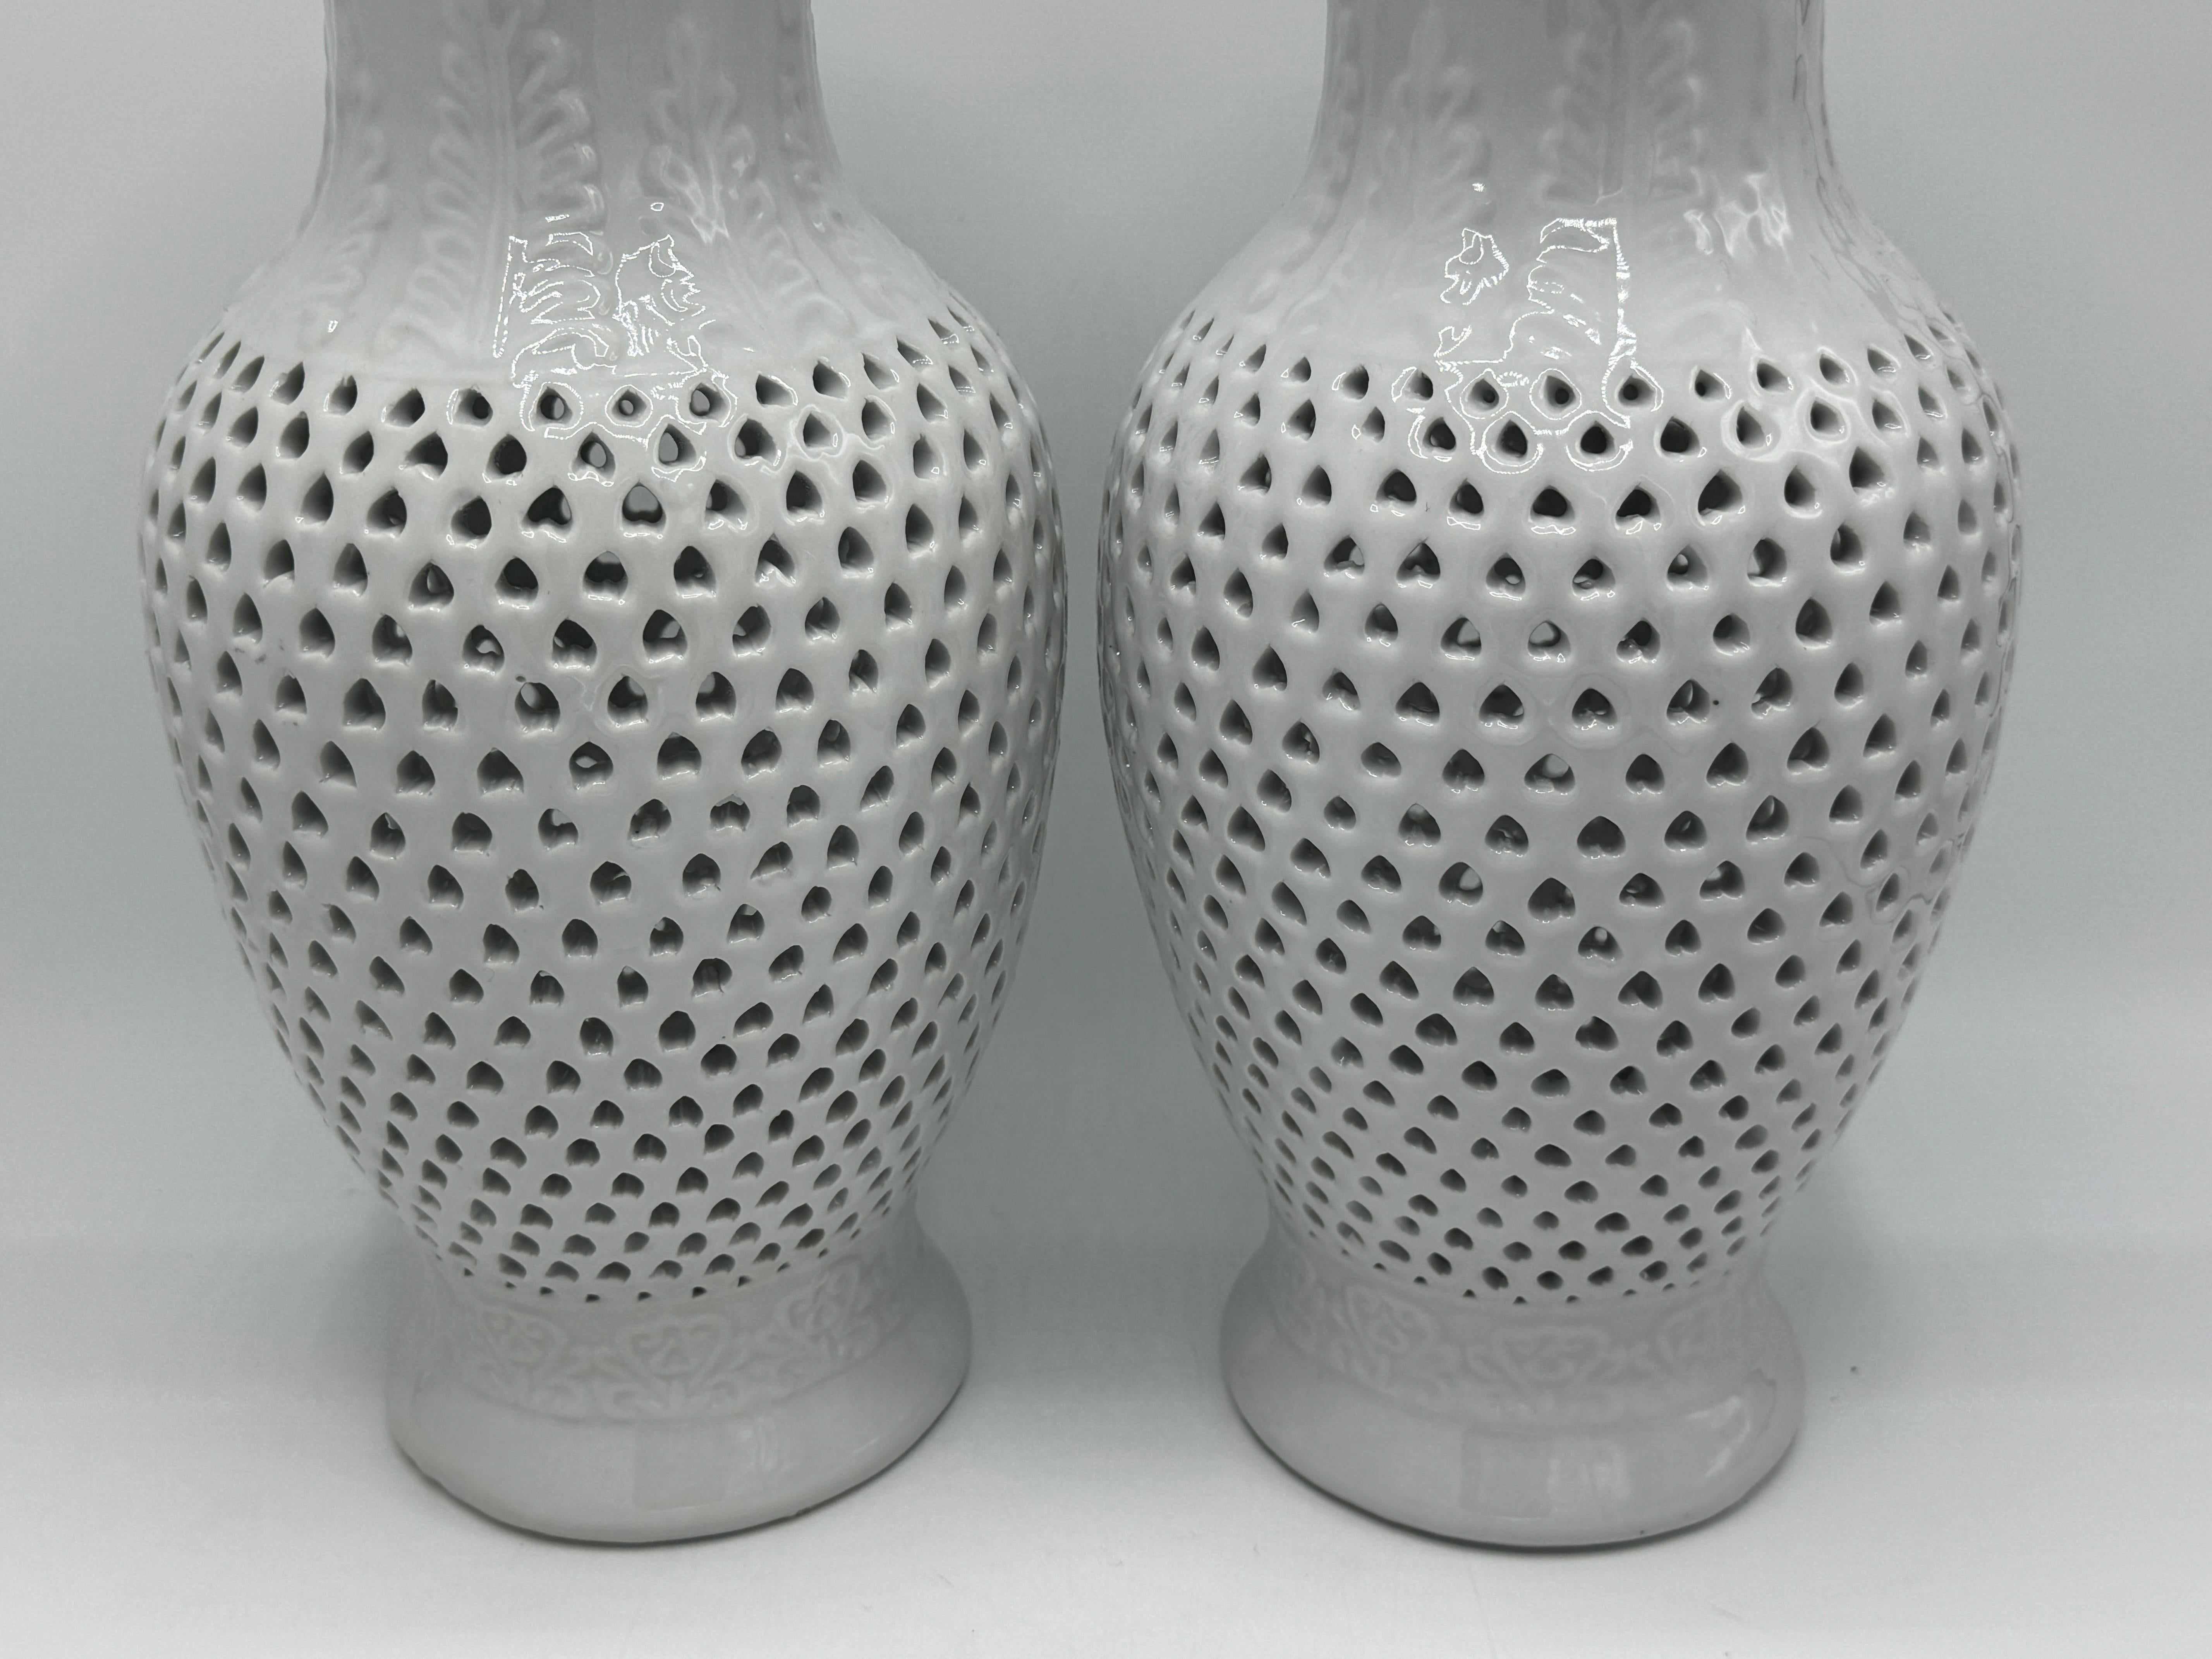 Glazed 1960s Blanc de Chine Pierced Porcelain Urn Vases, Pair For Sale